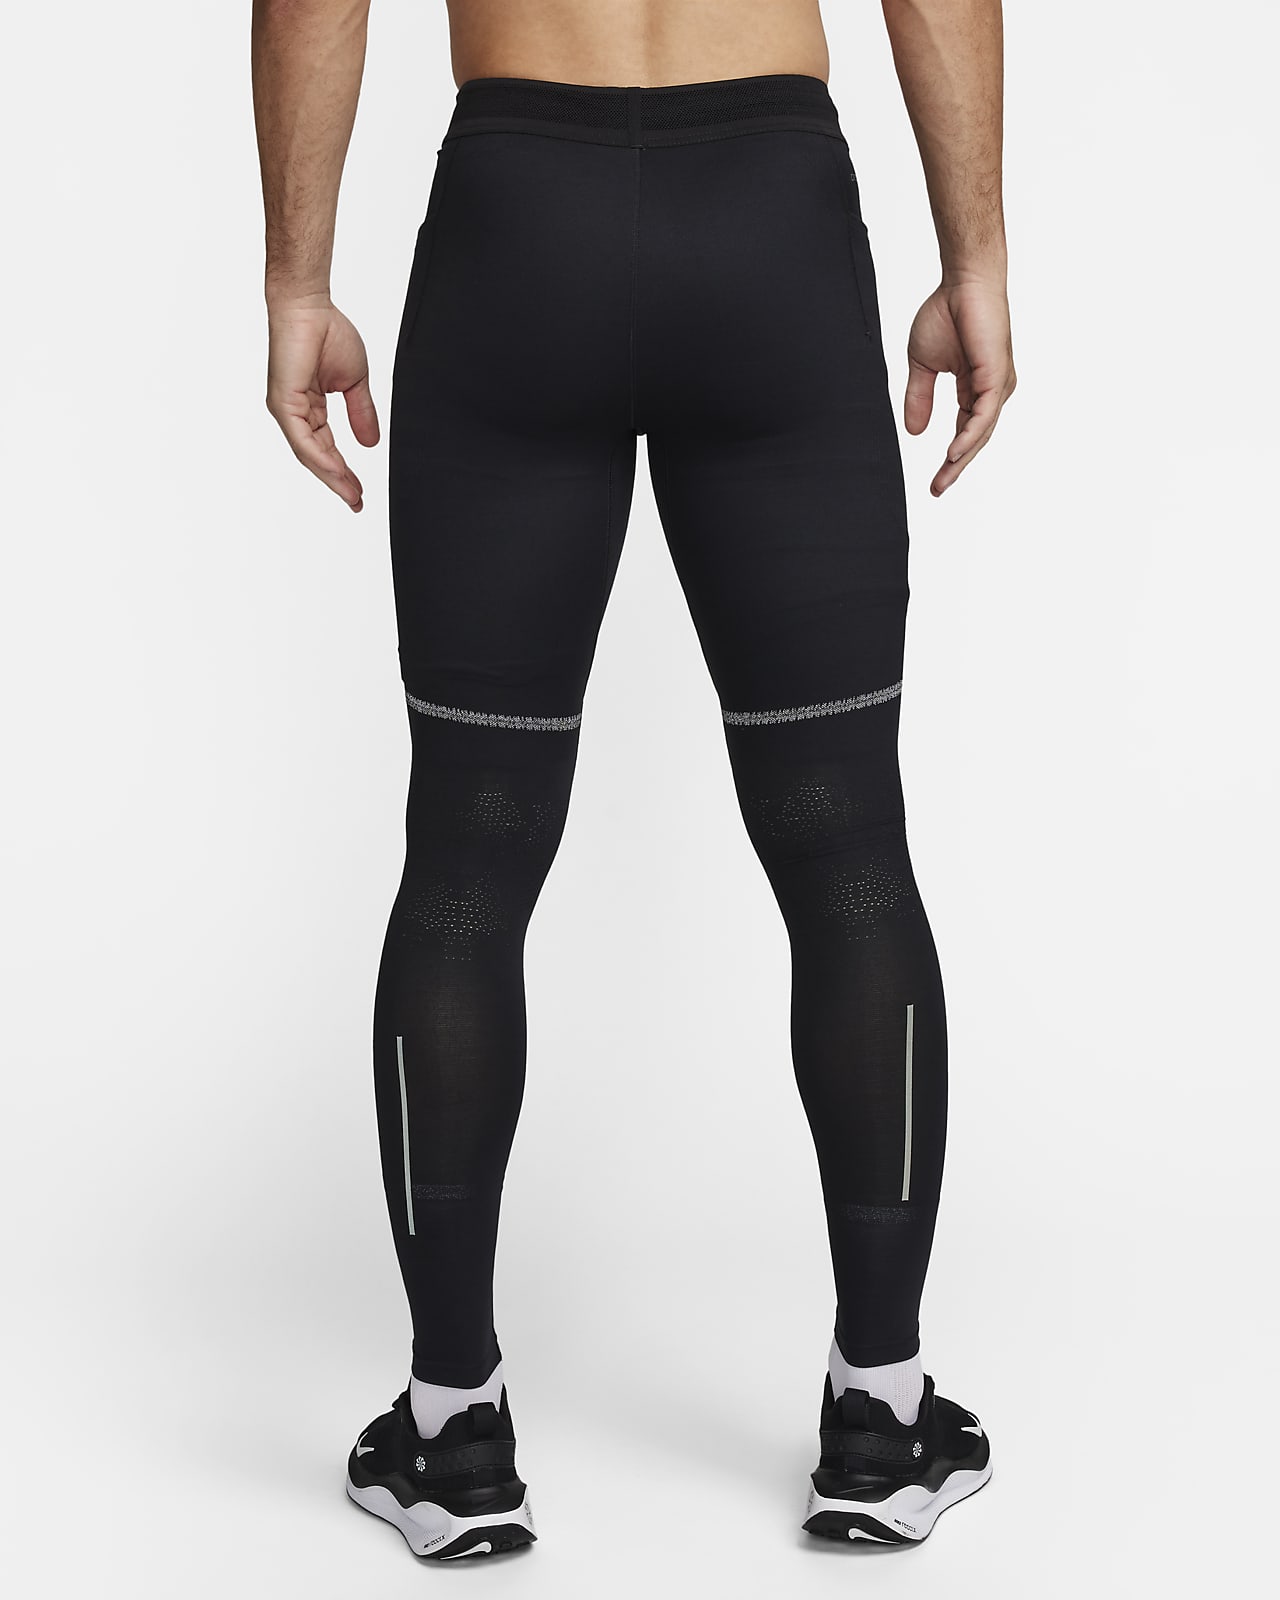 Men's Spandex Leggings Fitness Pants Stretch Low Waist Shiny Tight Gym Wear  Slim 